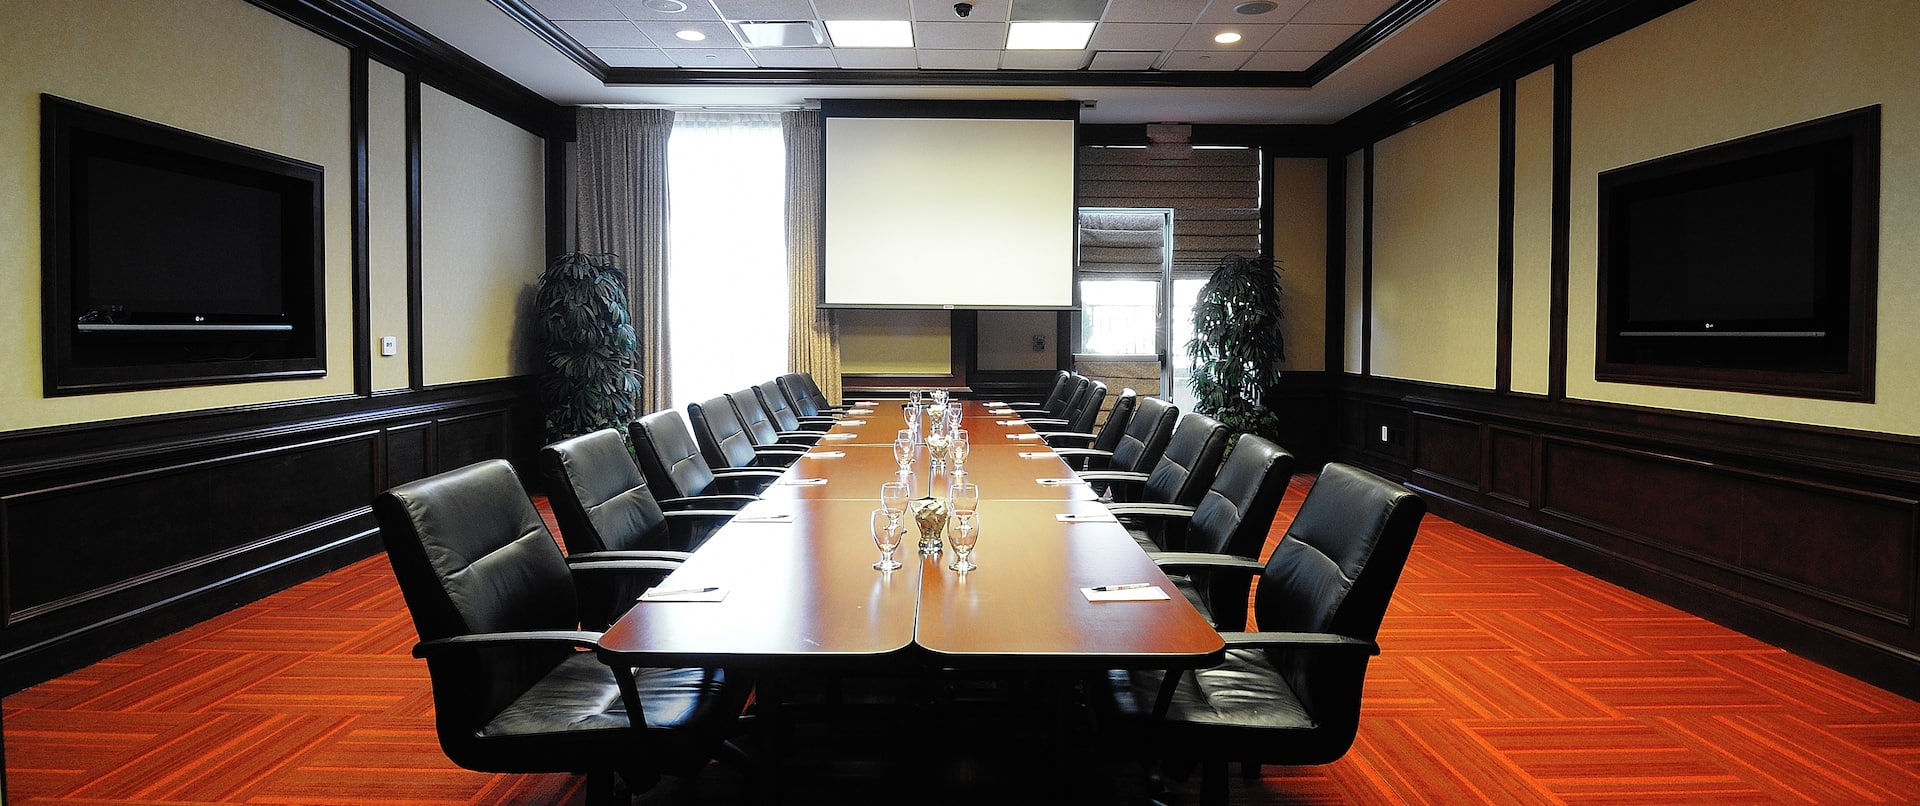 Boardroom Meeting Facility